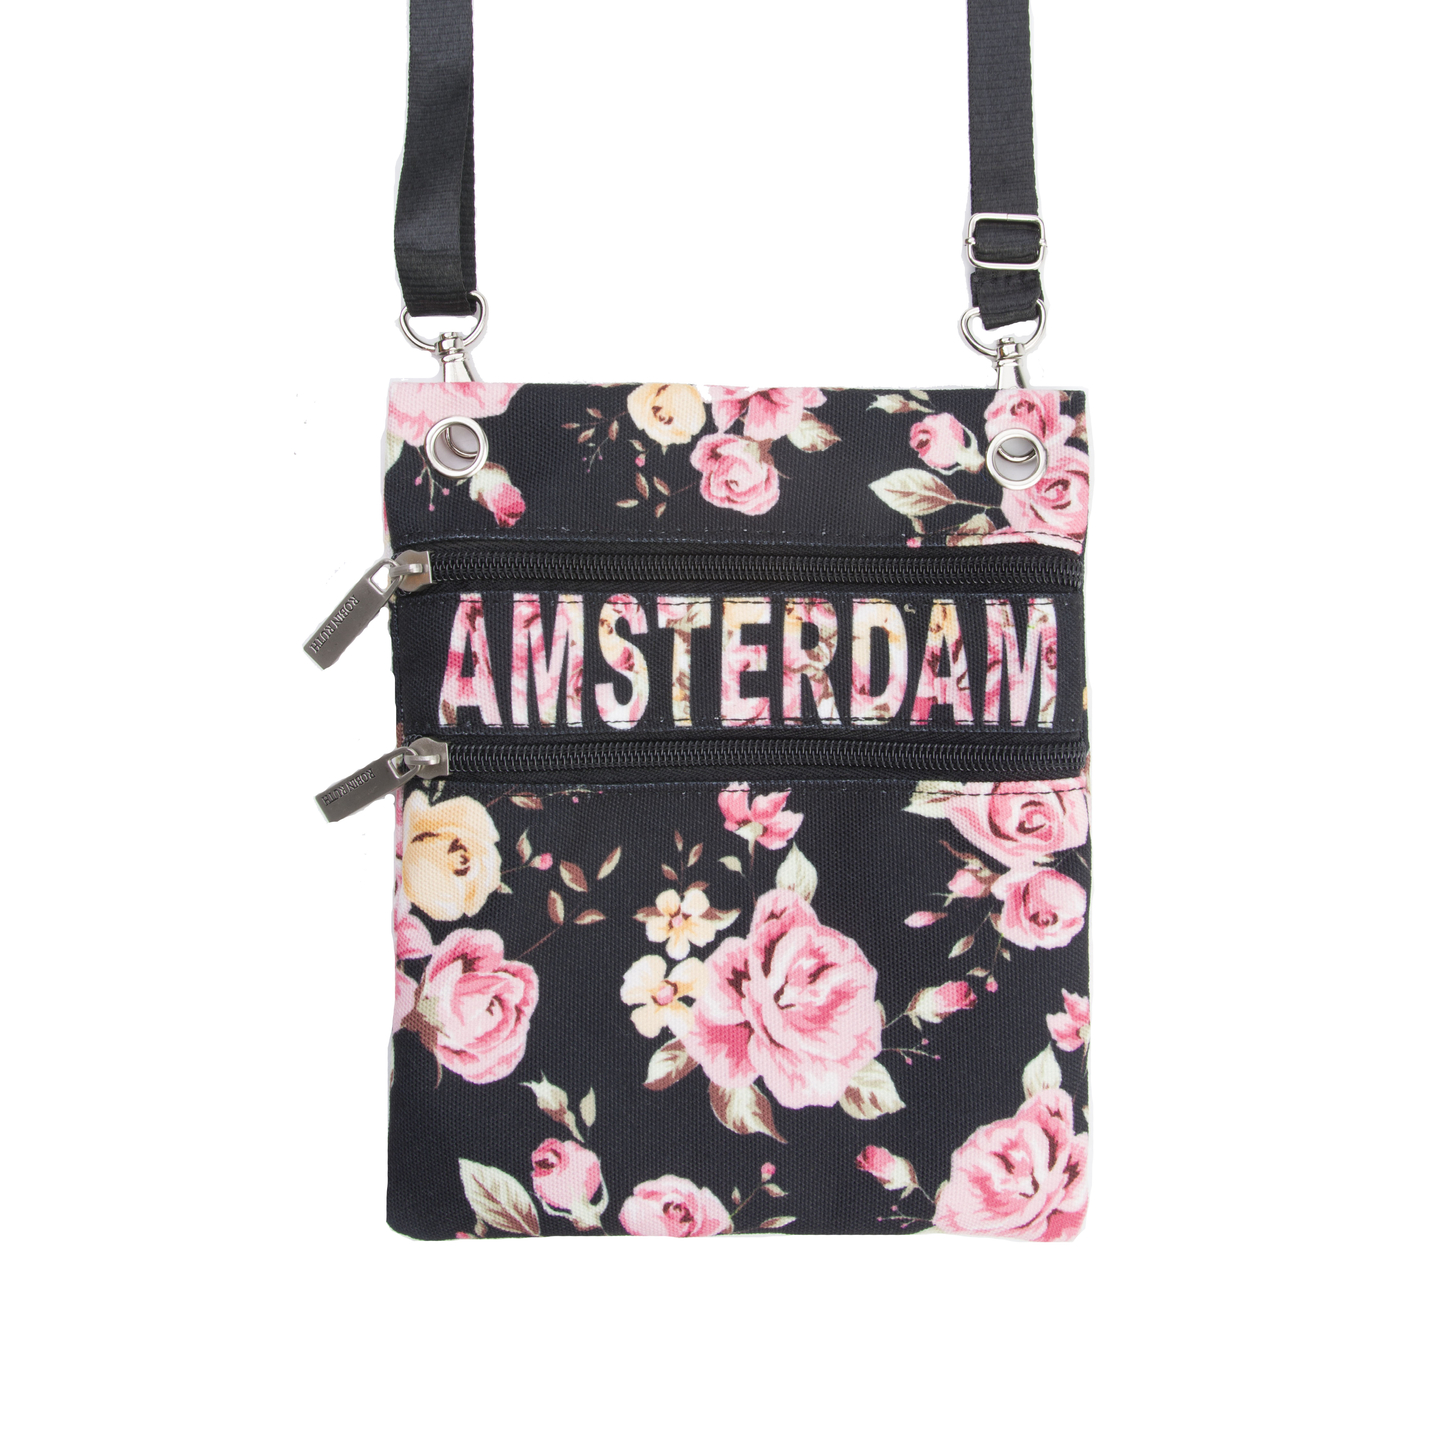 Charlie flowers - Passport bag - Amsterdam